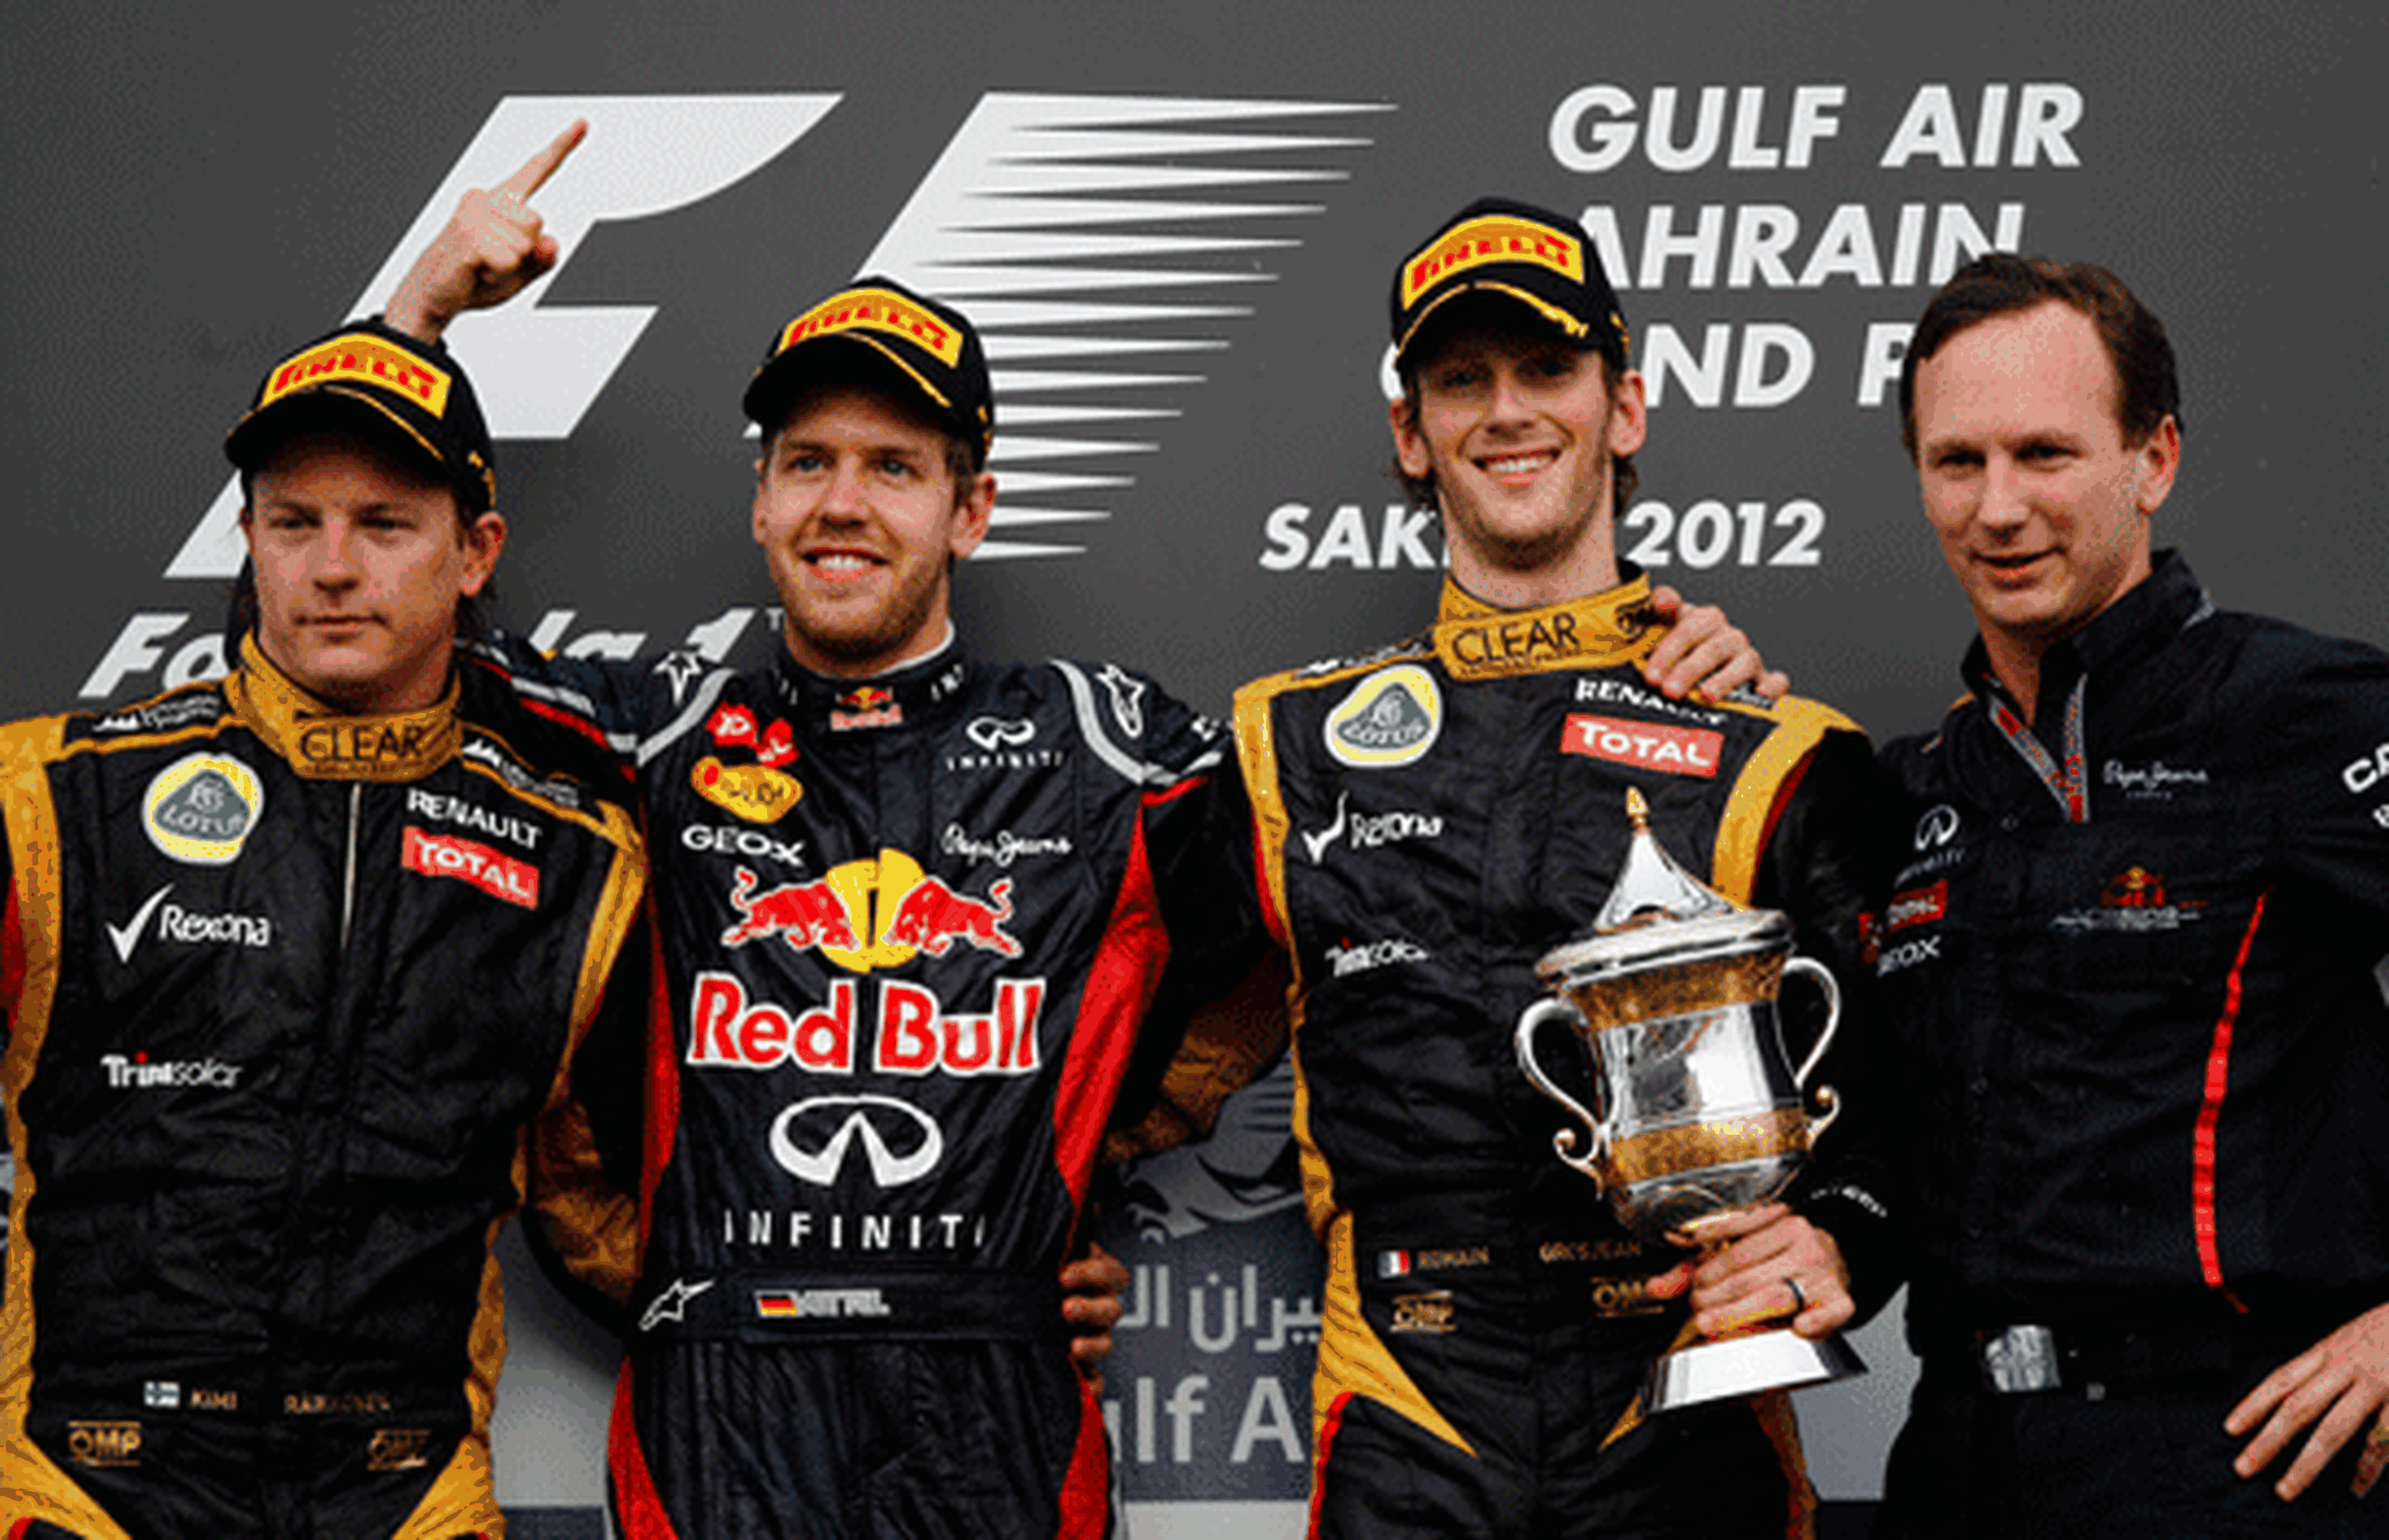 Podio del GP de Bahréin de F1 2012